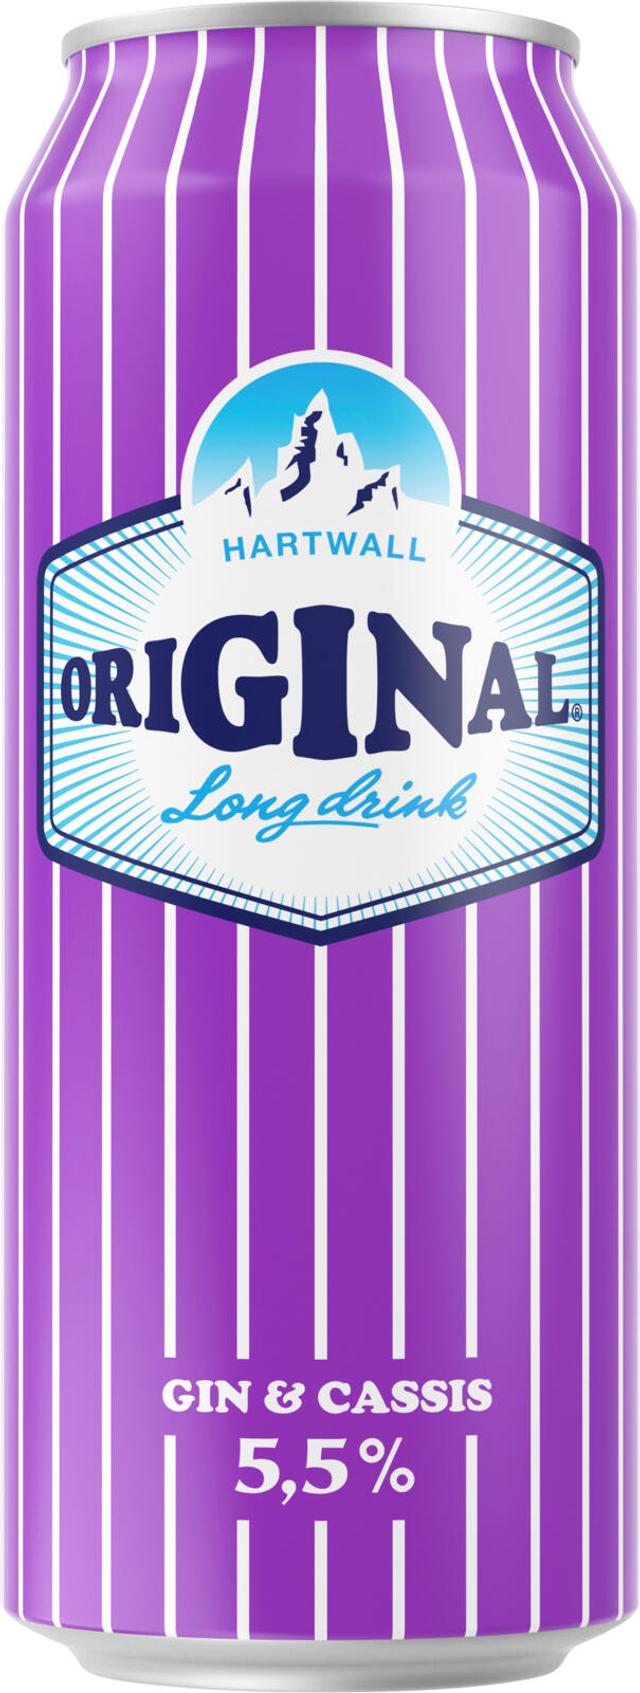 Hartwall Original Long Drink Cassis  5,5% 0,5 l